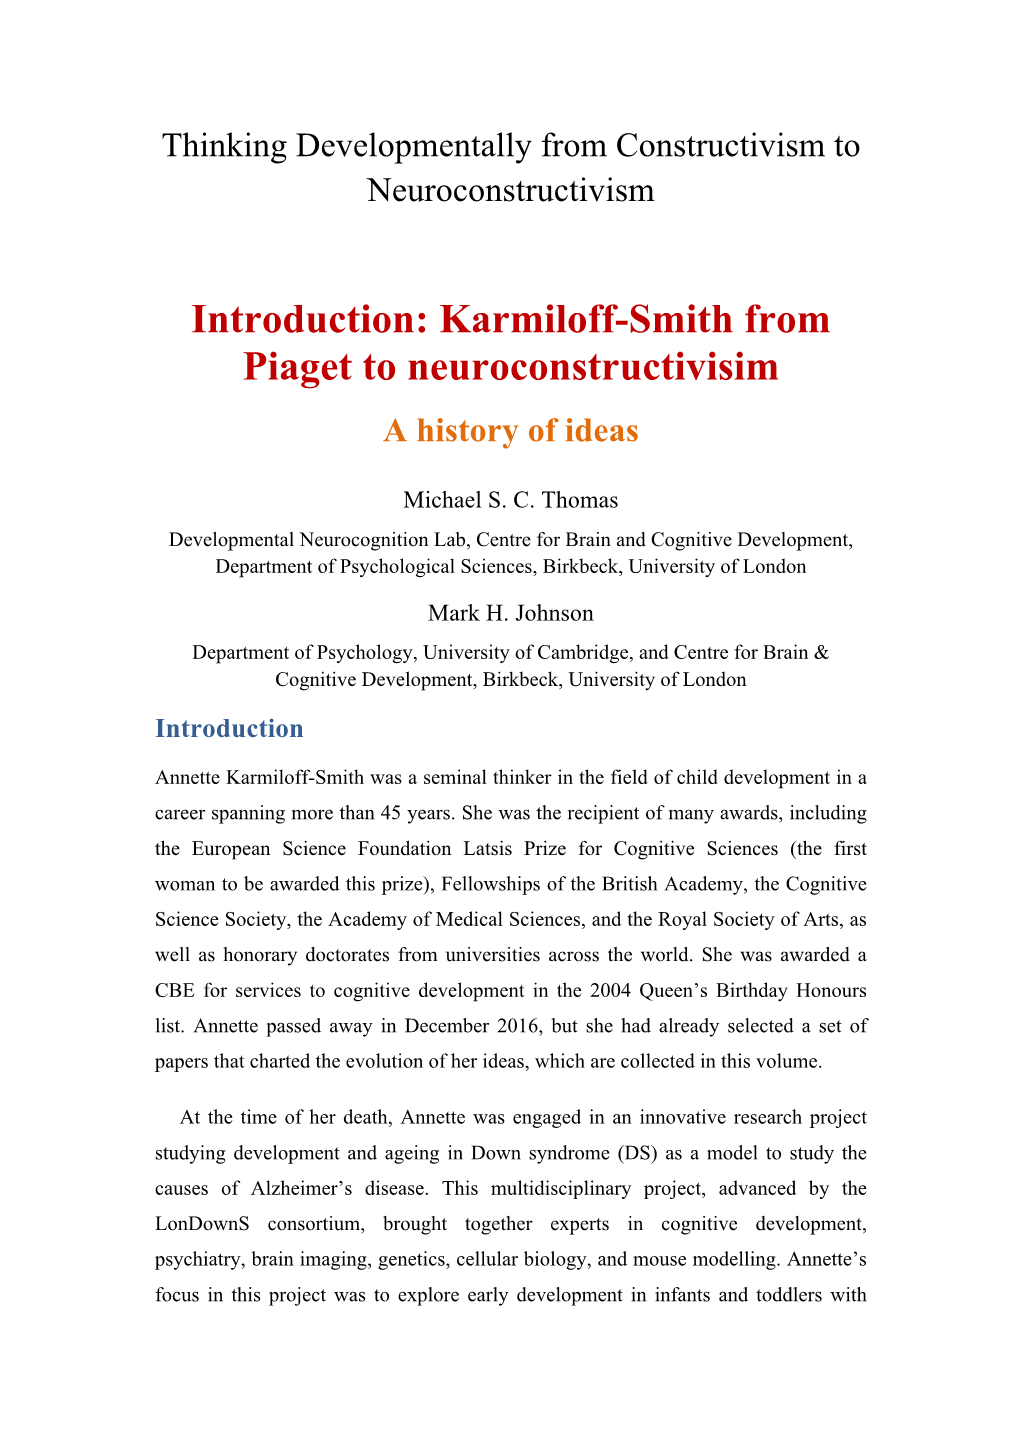 Introduction: Karmiloff-Smith from Piaget to Neuroconstructivisim a History of Ideas